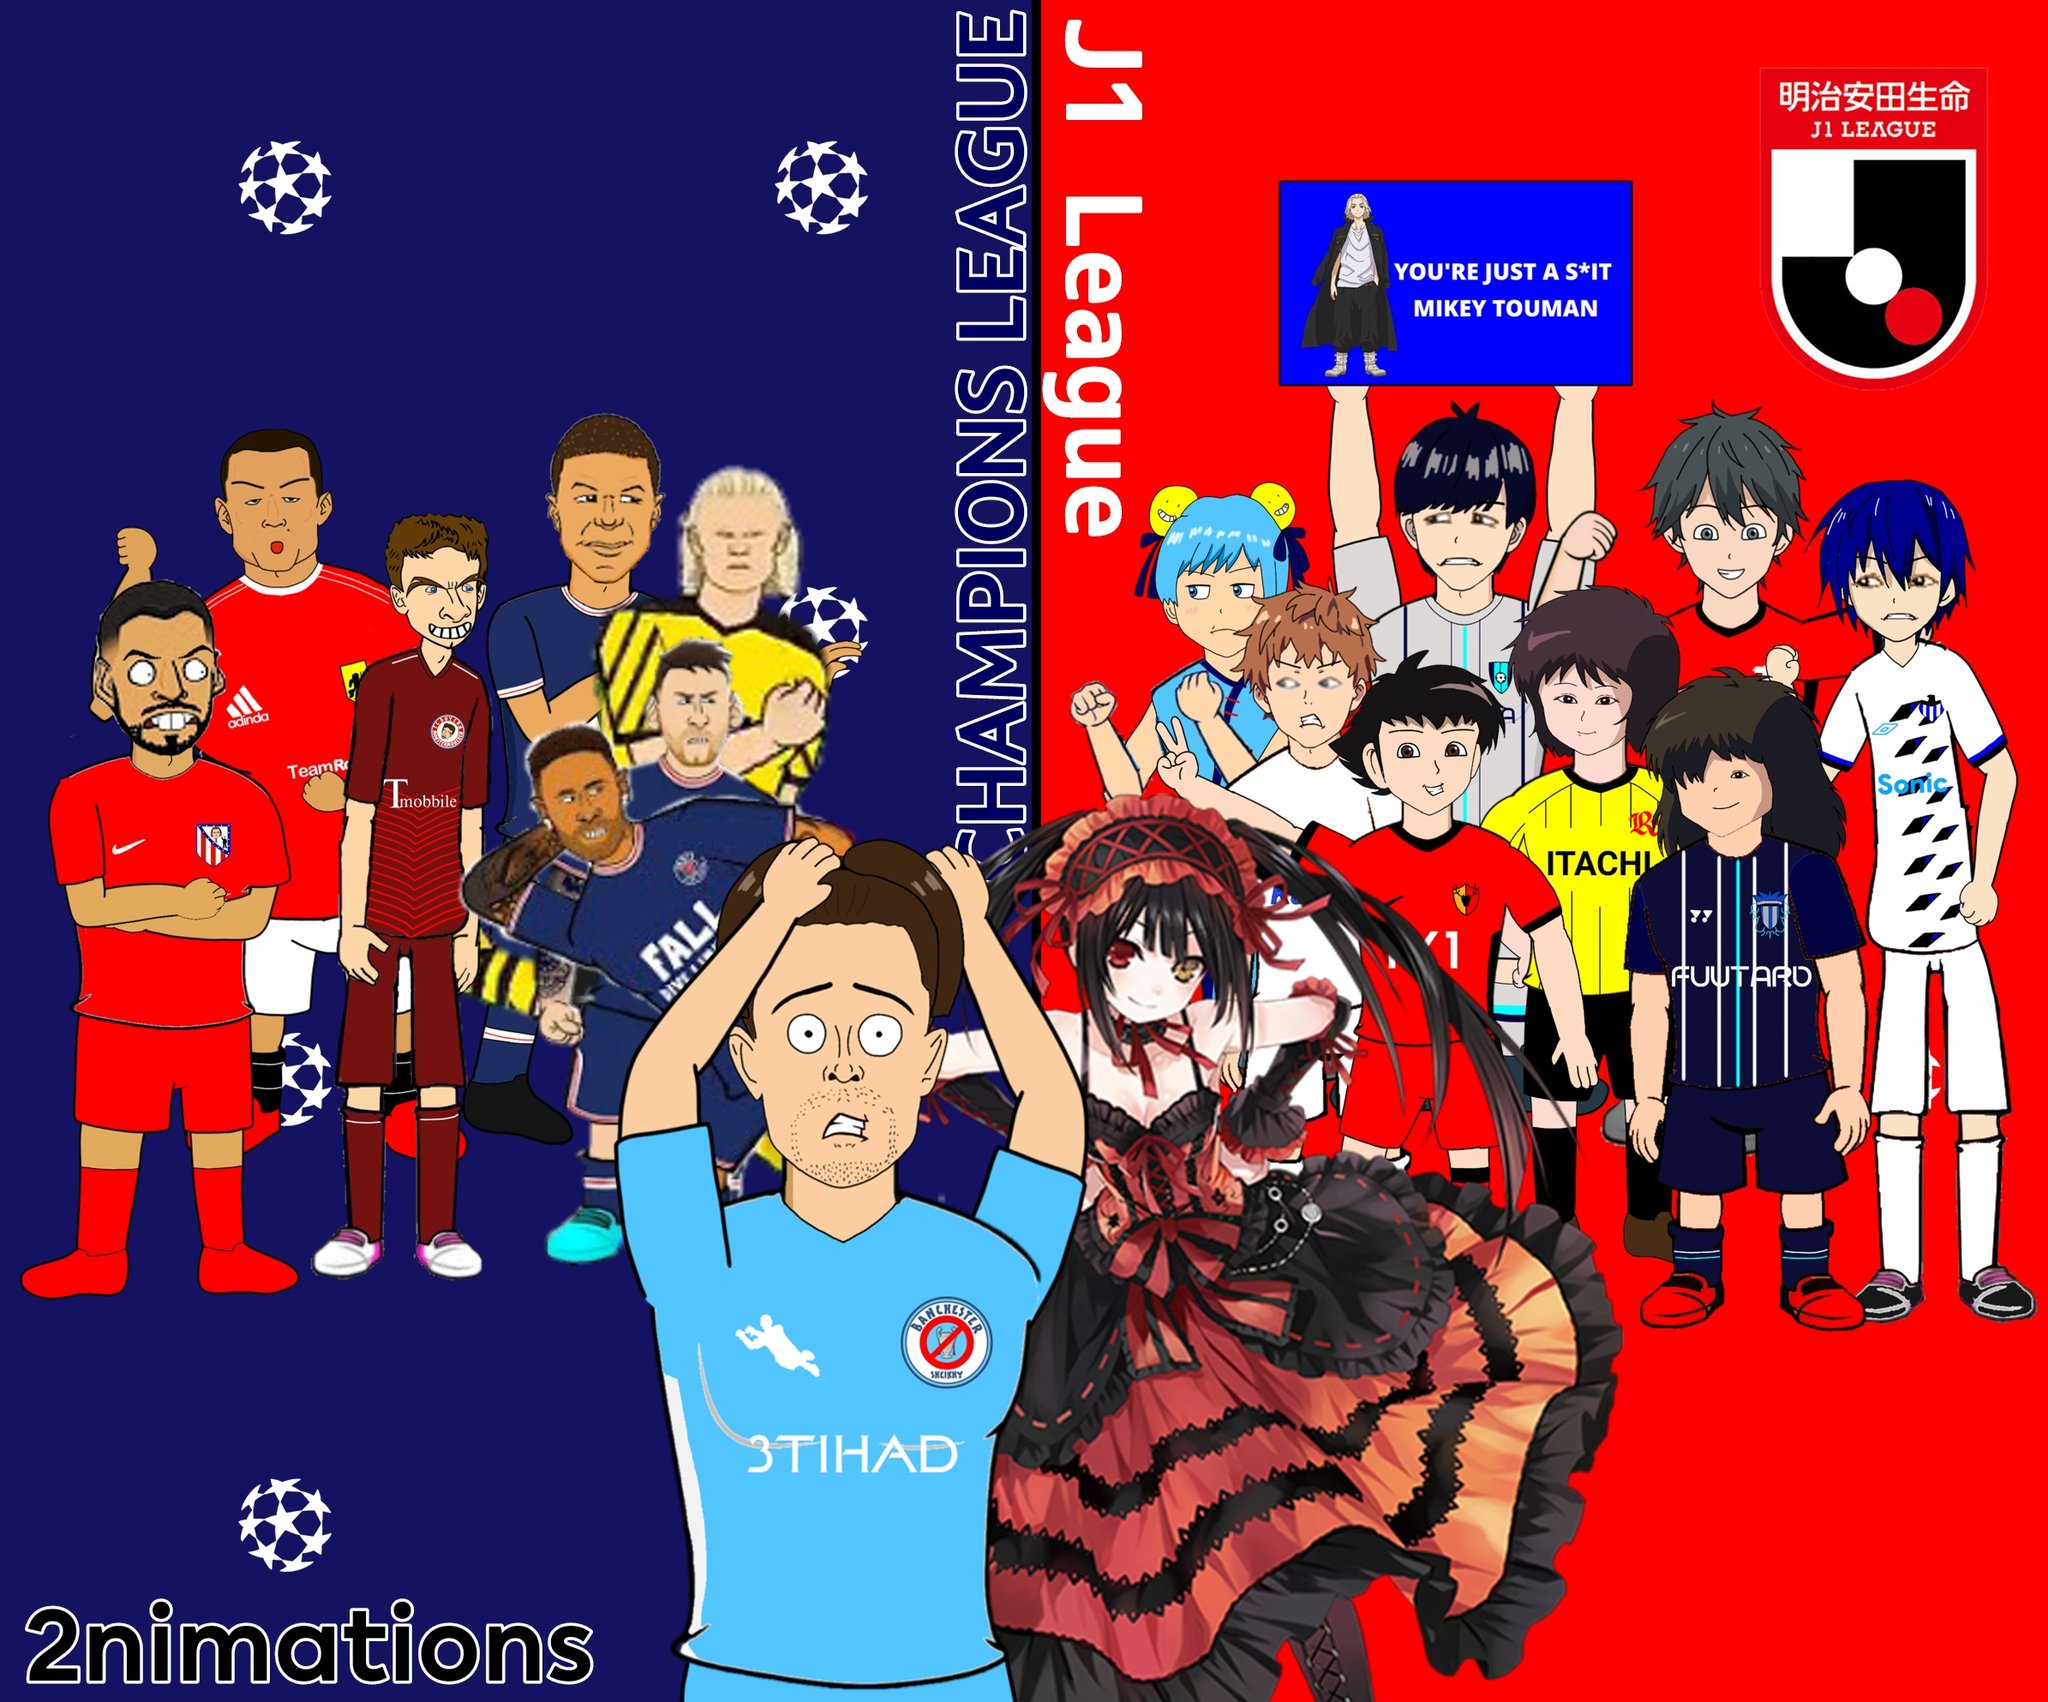 London United FC (BritLeague team) by superant92 on DeviantArt